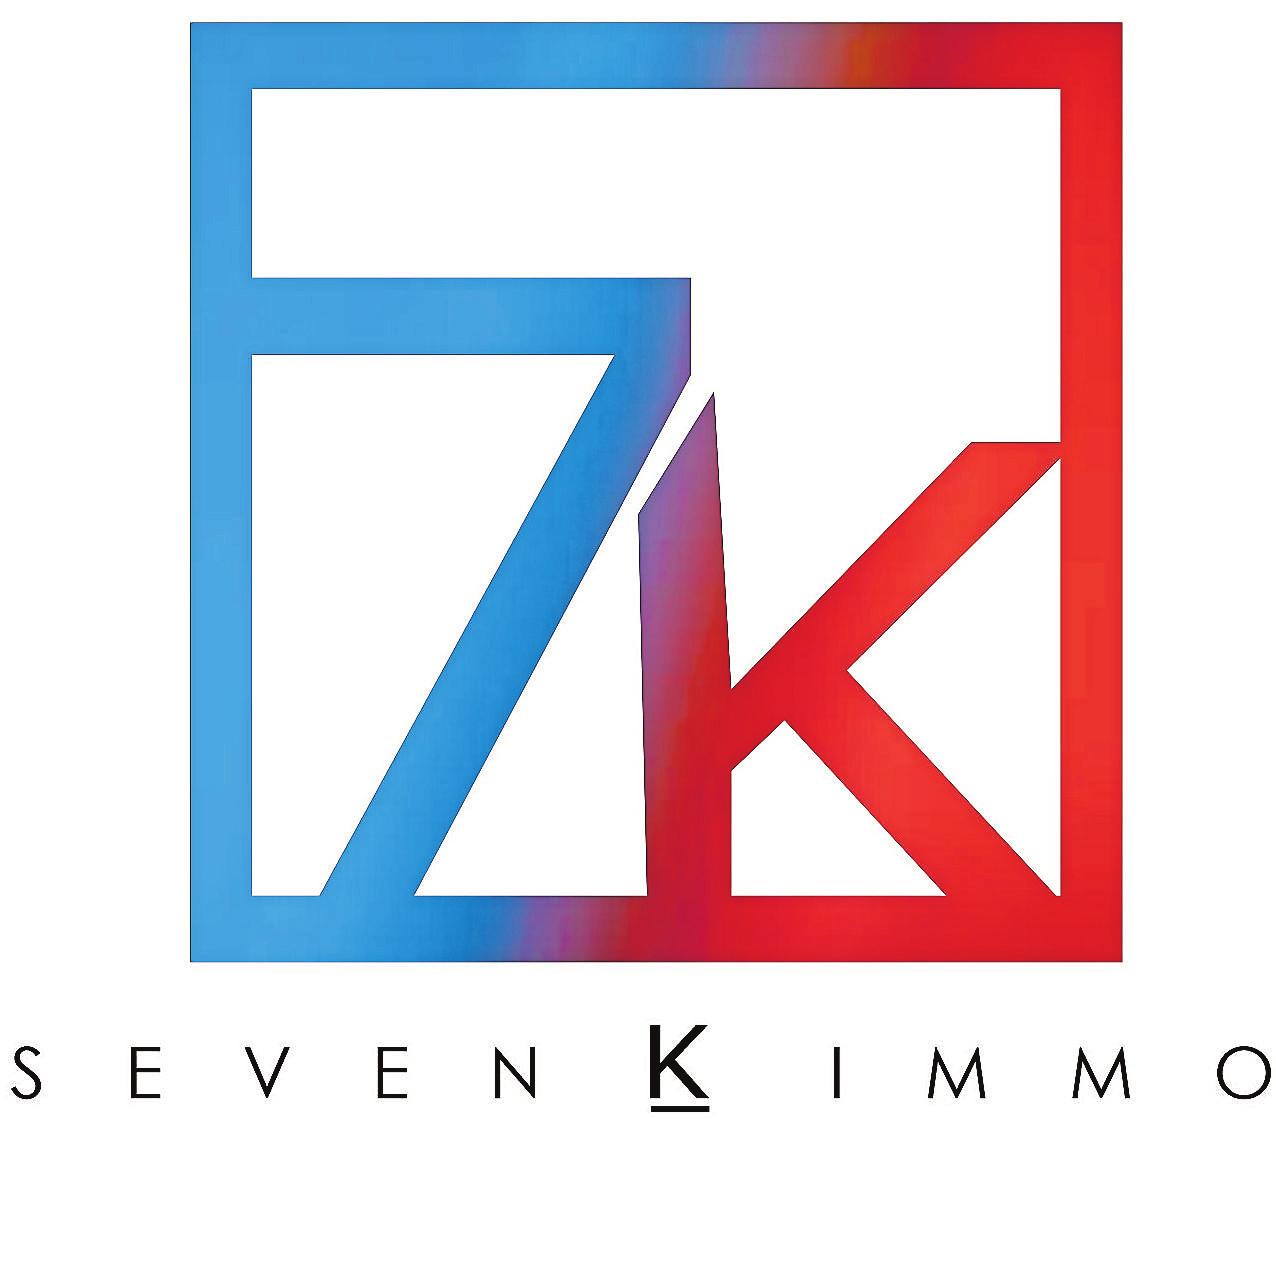 Seven K Immo logo _ C.